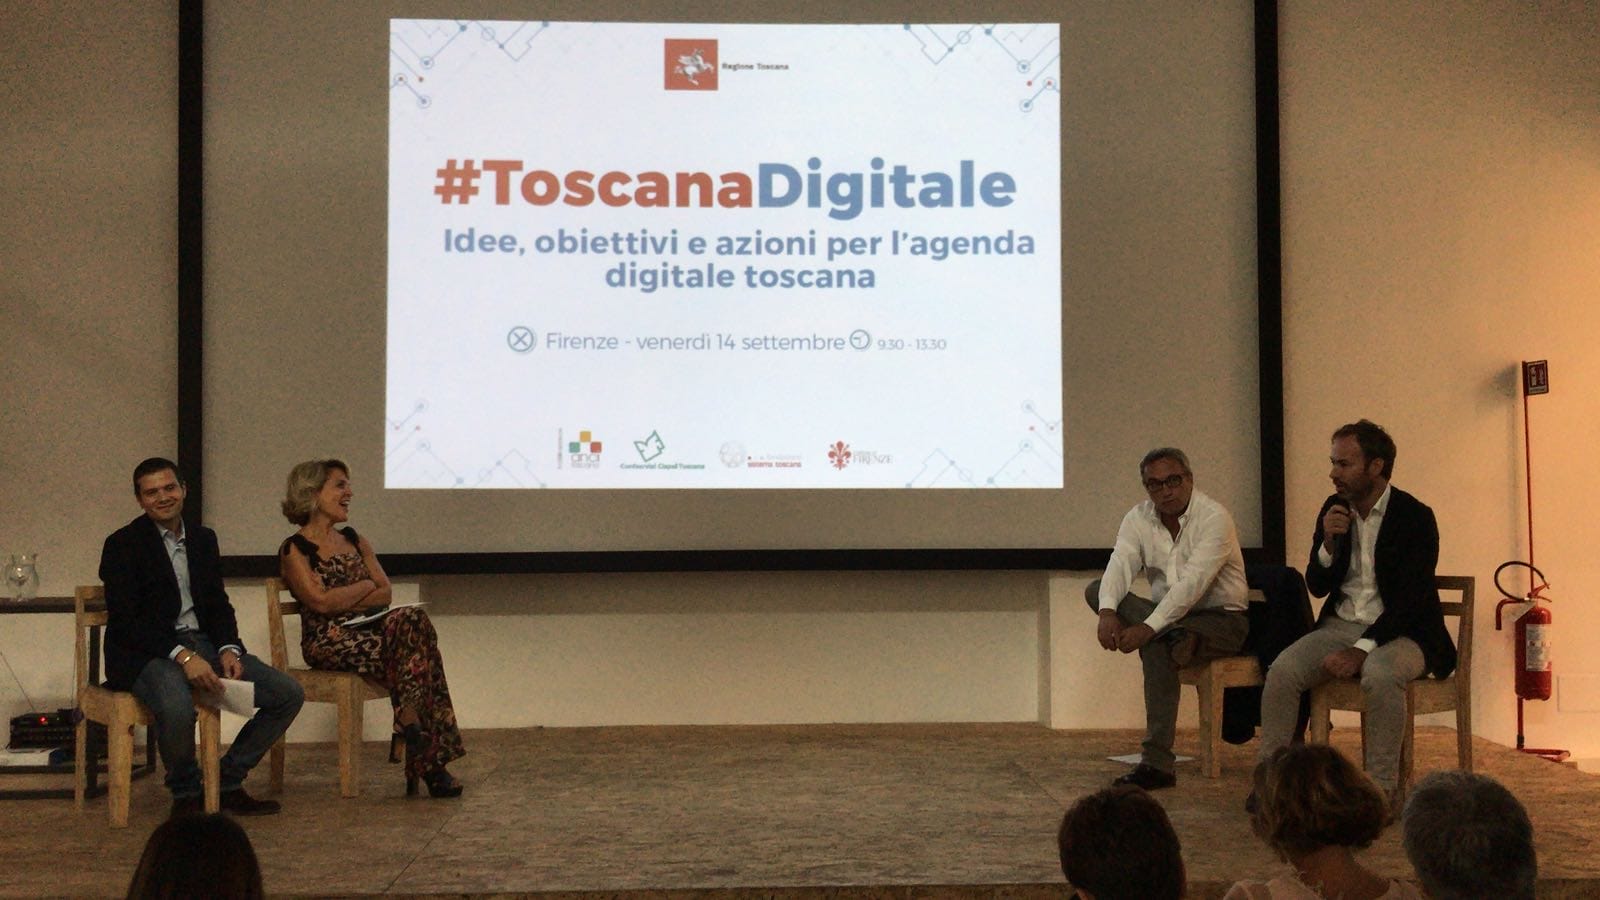 Toscana digitale: il 14 settembre tappa a Firenze